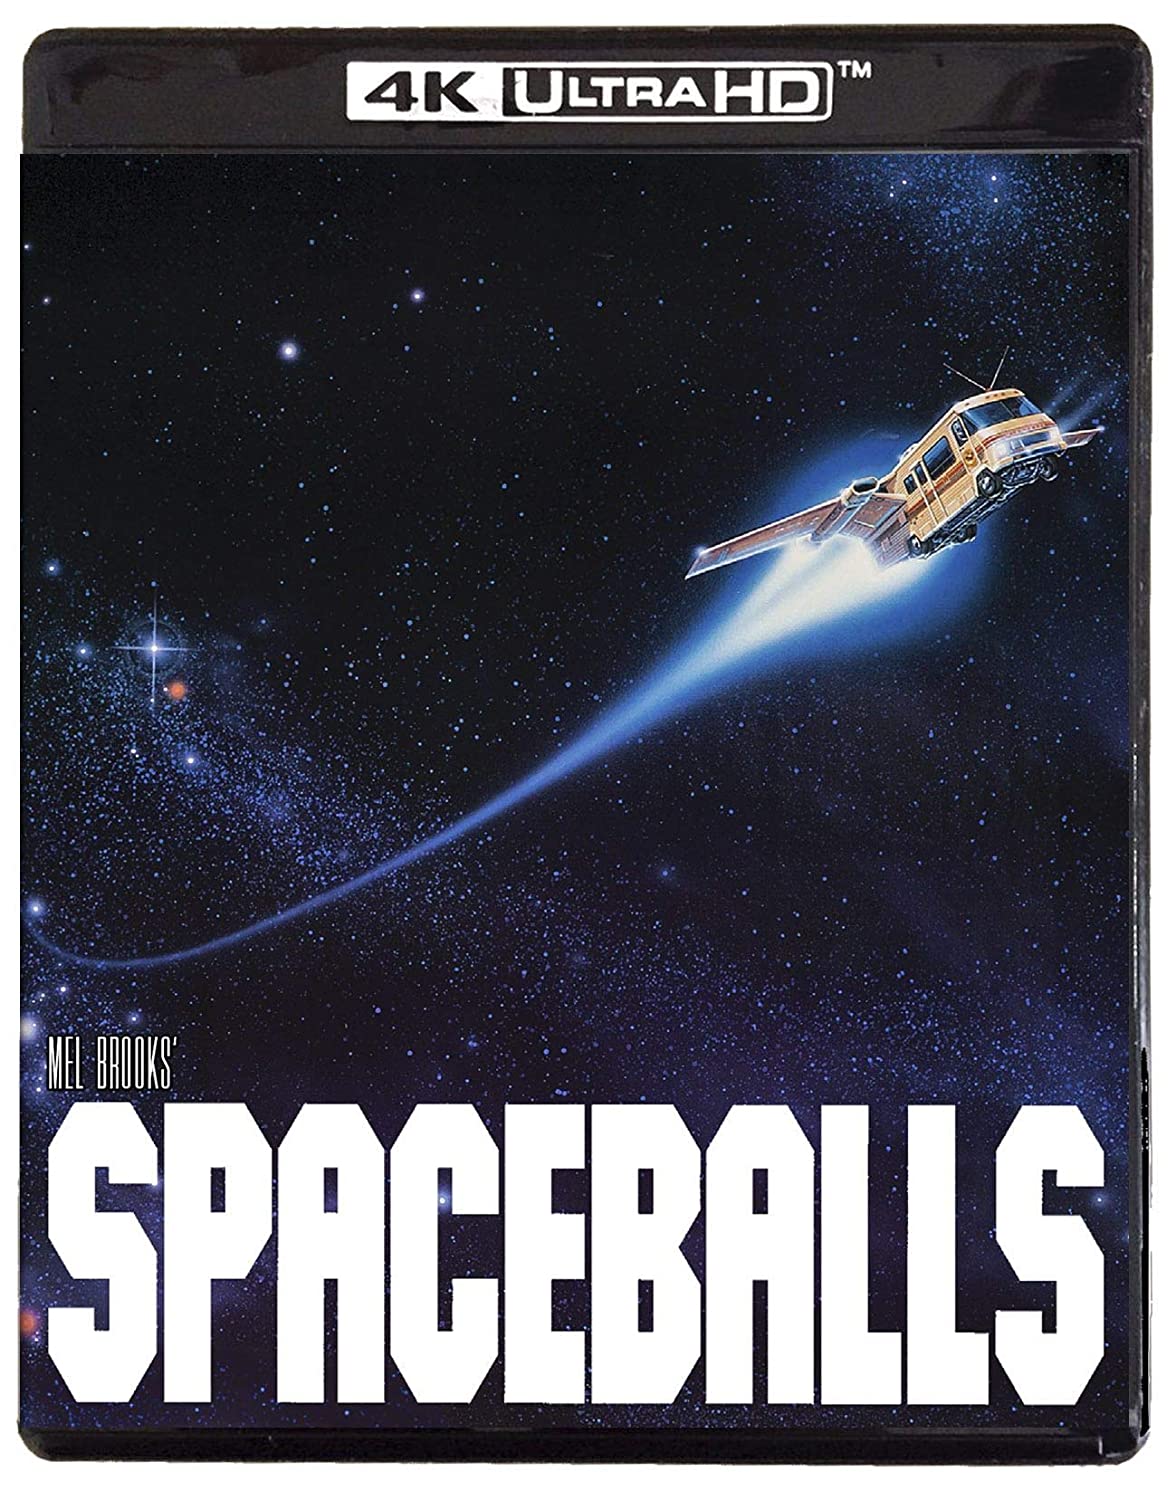 Spaceballs 4k Blu-ray alt cover